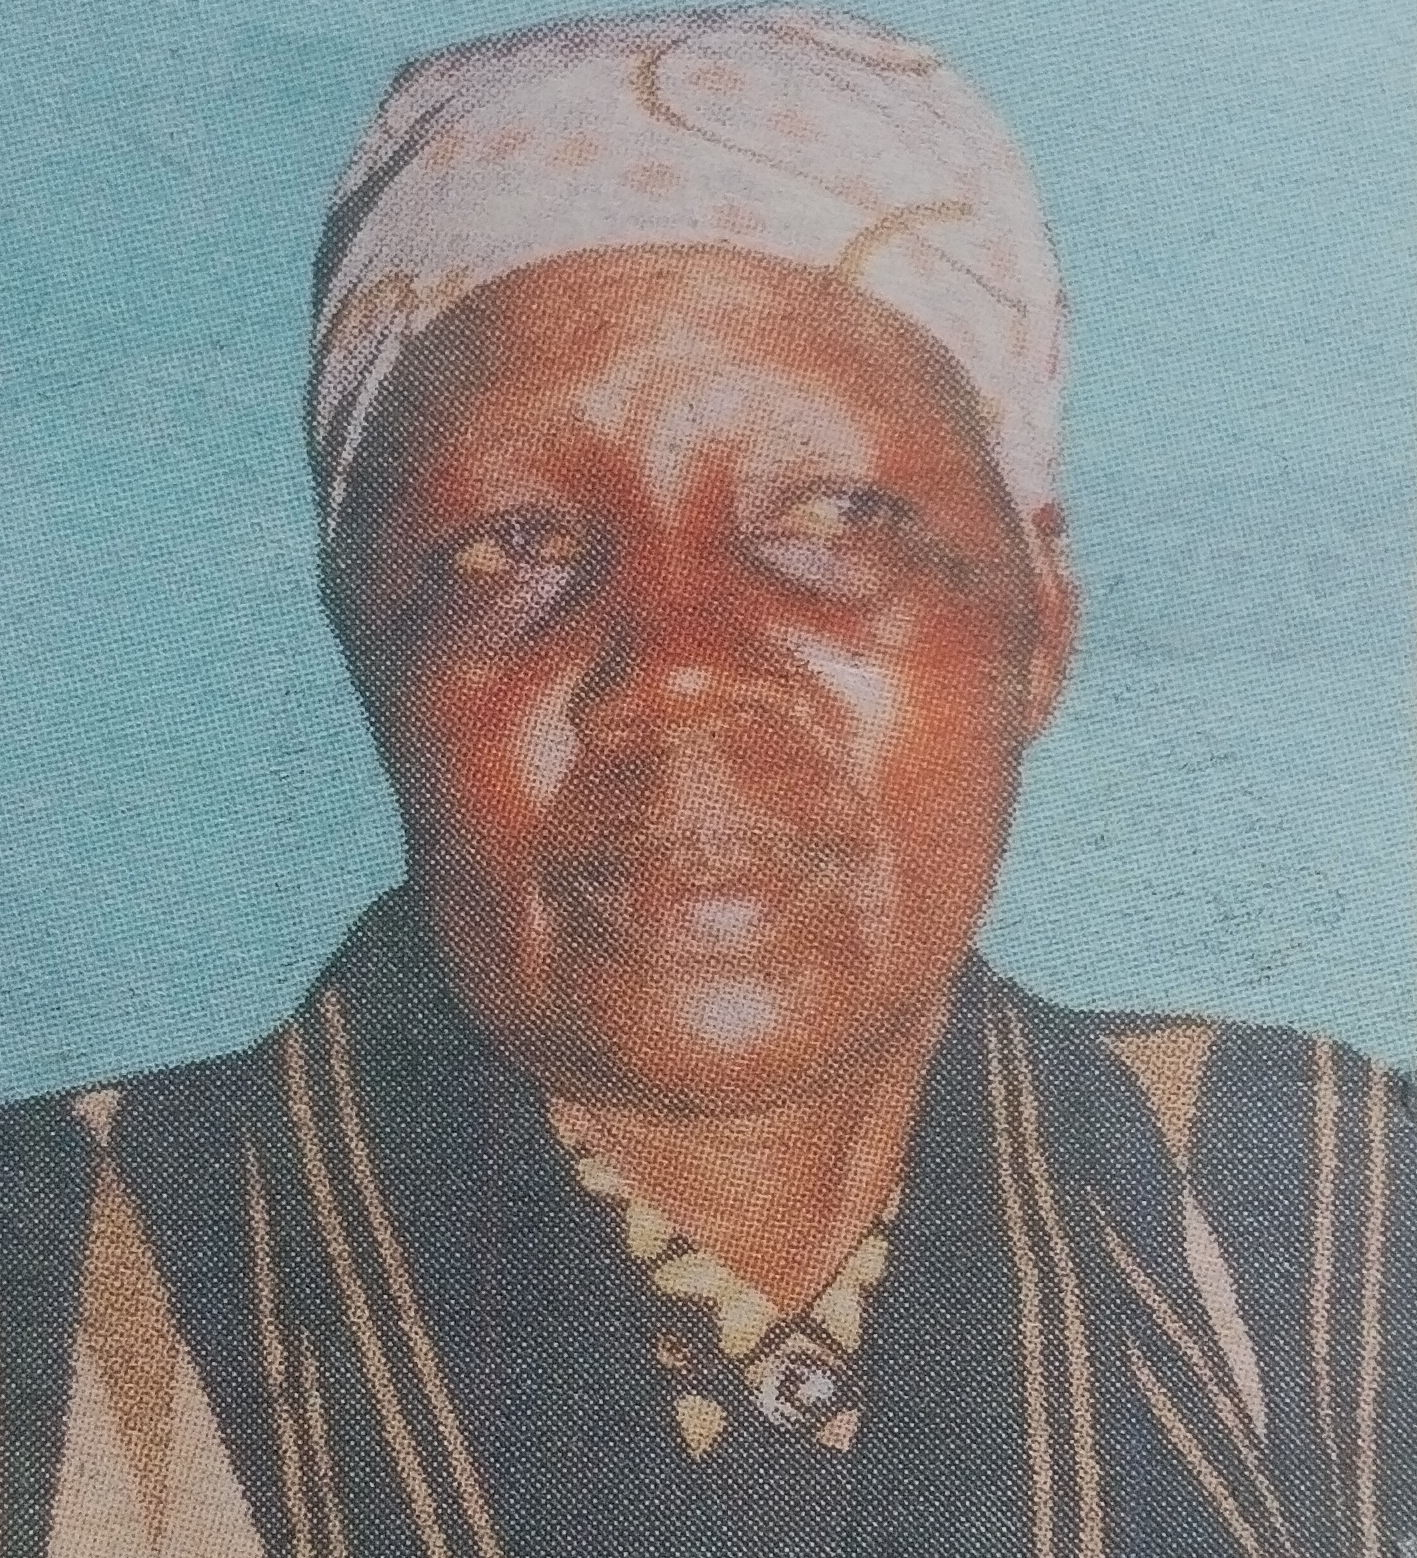 Obituary Image of Beatrice Gathoni Wambugu